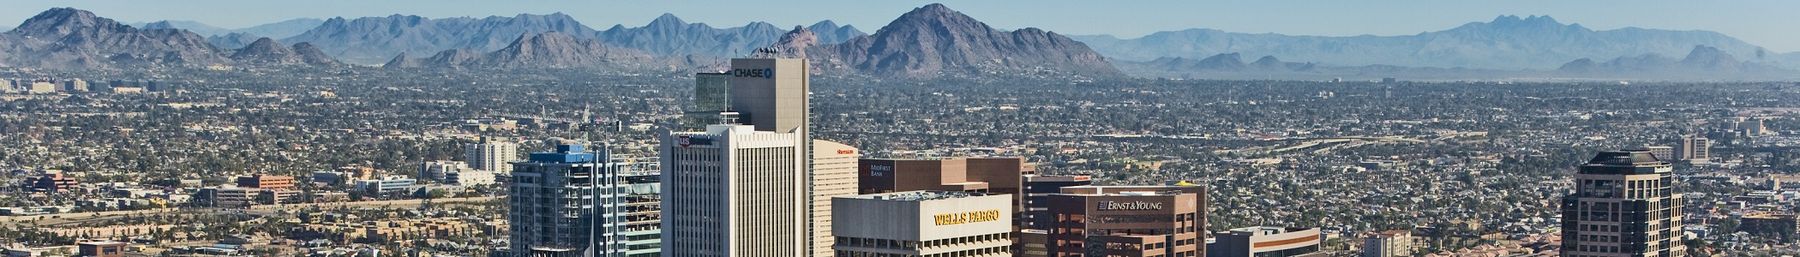 Downtown Phoenix banner.jpg